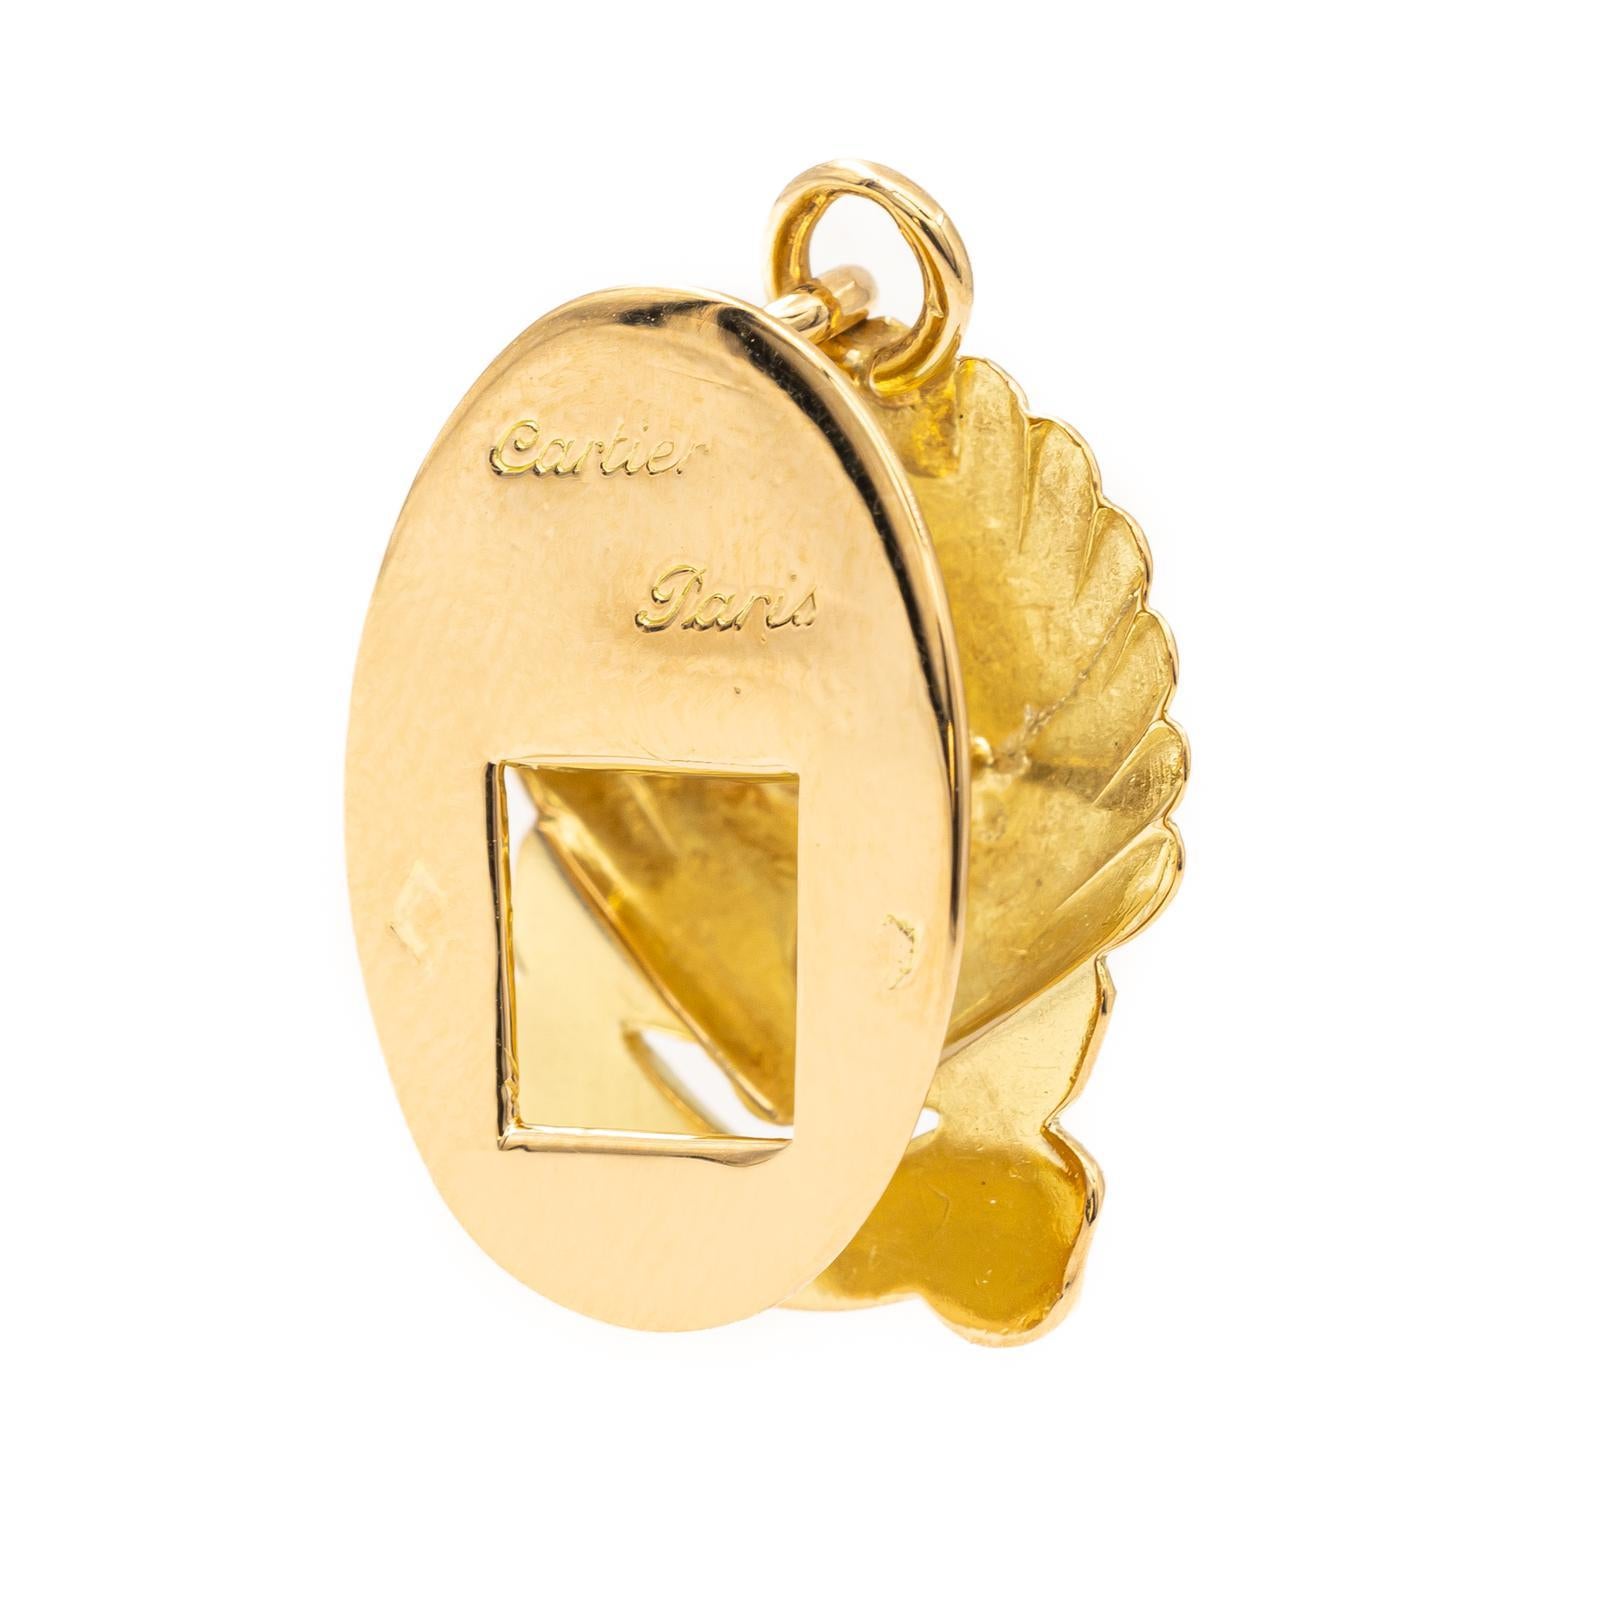 Brilliant Cut Cartier Pendant Necklace Yellow Gold Diamond For Sale